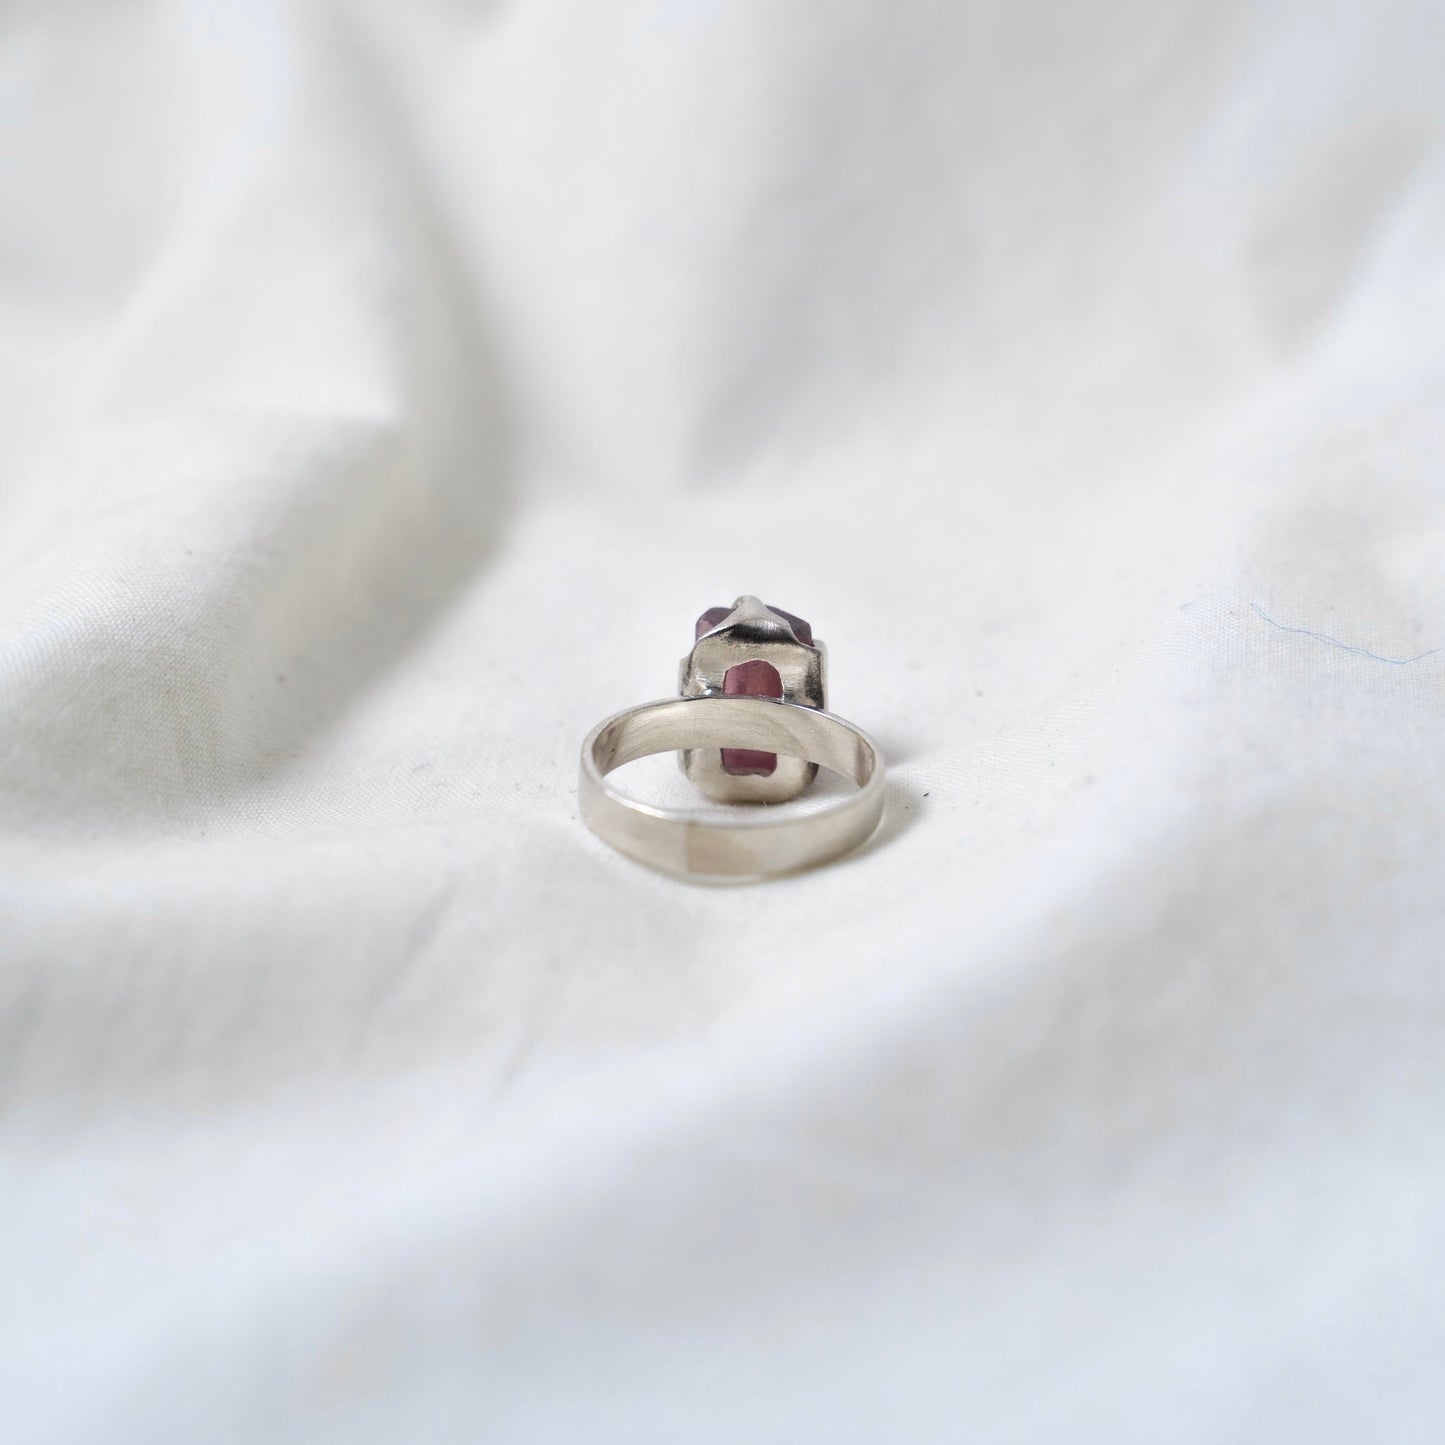 Handmade raw pink tourmaline silver ring